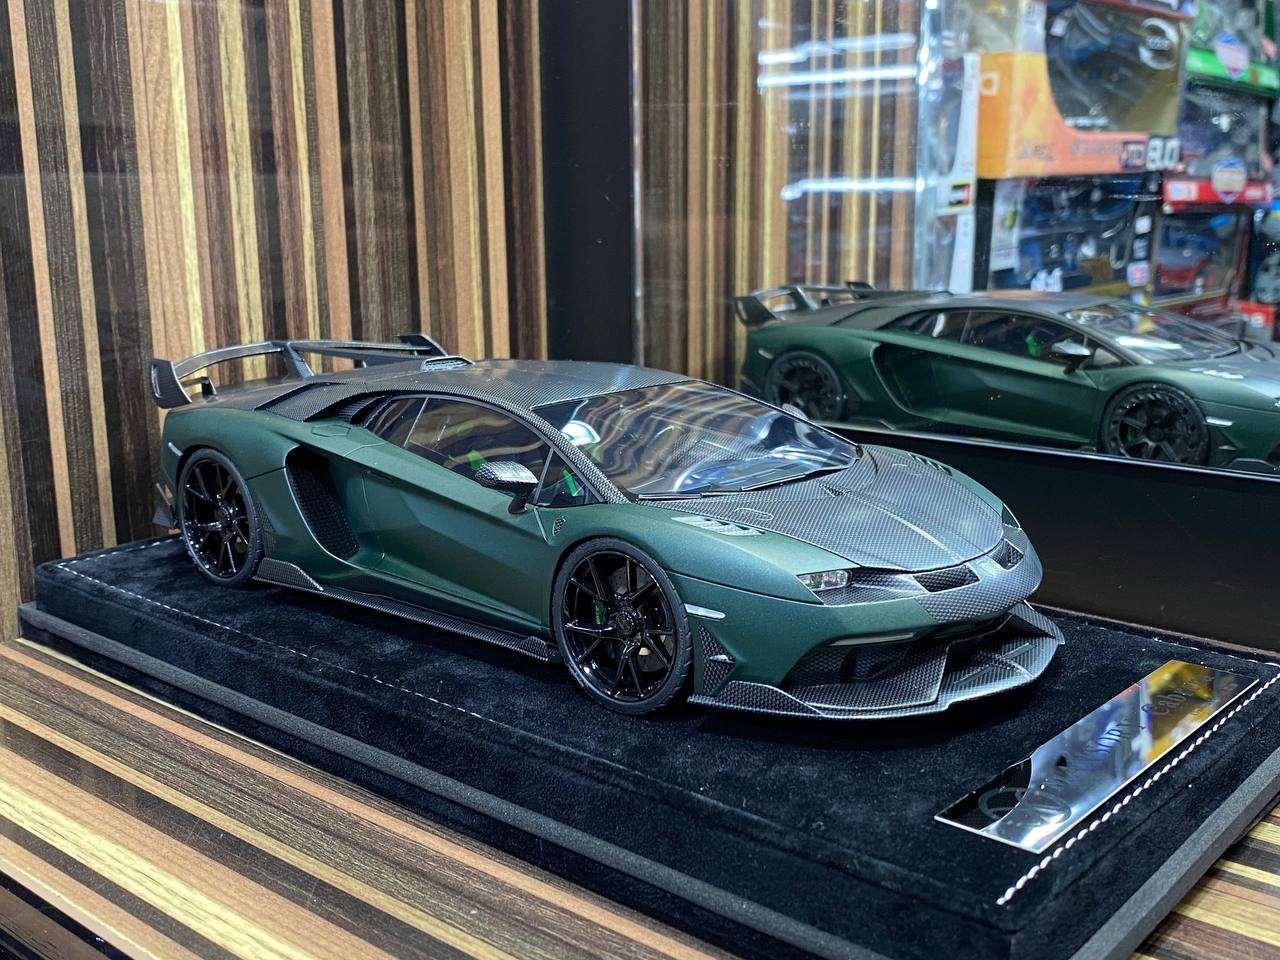 1/18 Diecast Bugatti Mansory Cabrera - Green Model Car|Sold in Dturman.com Dubai UAE.